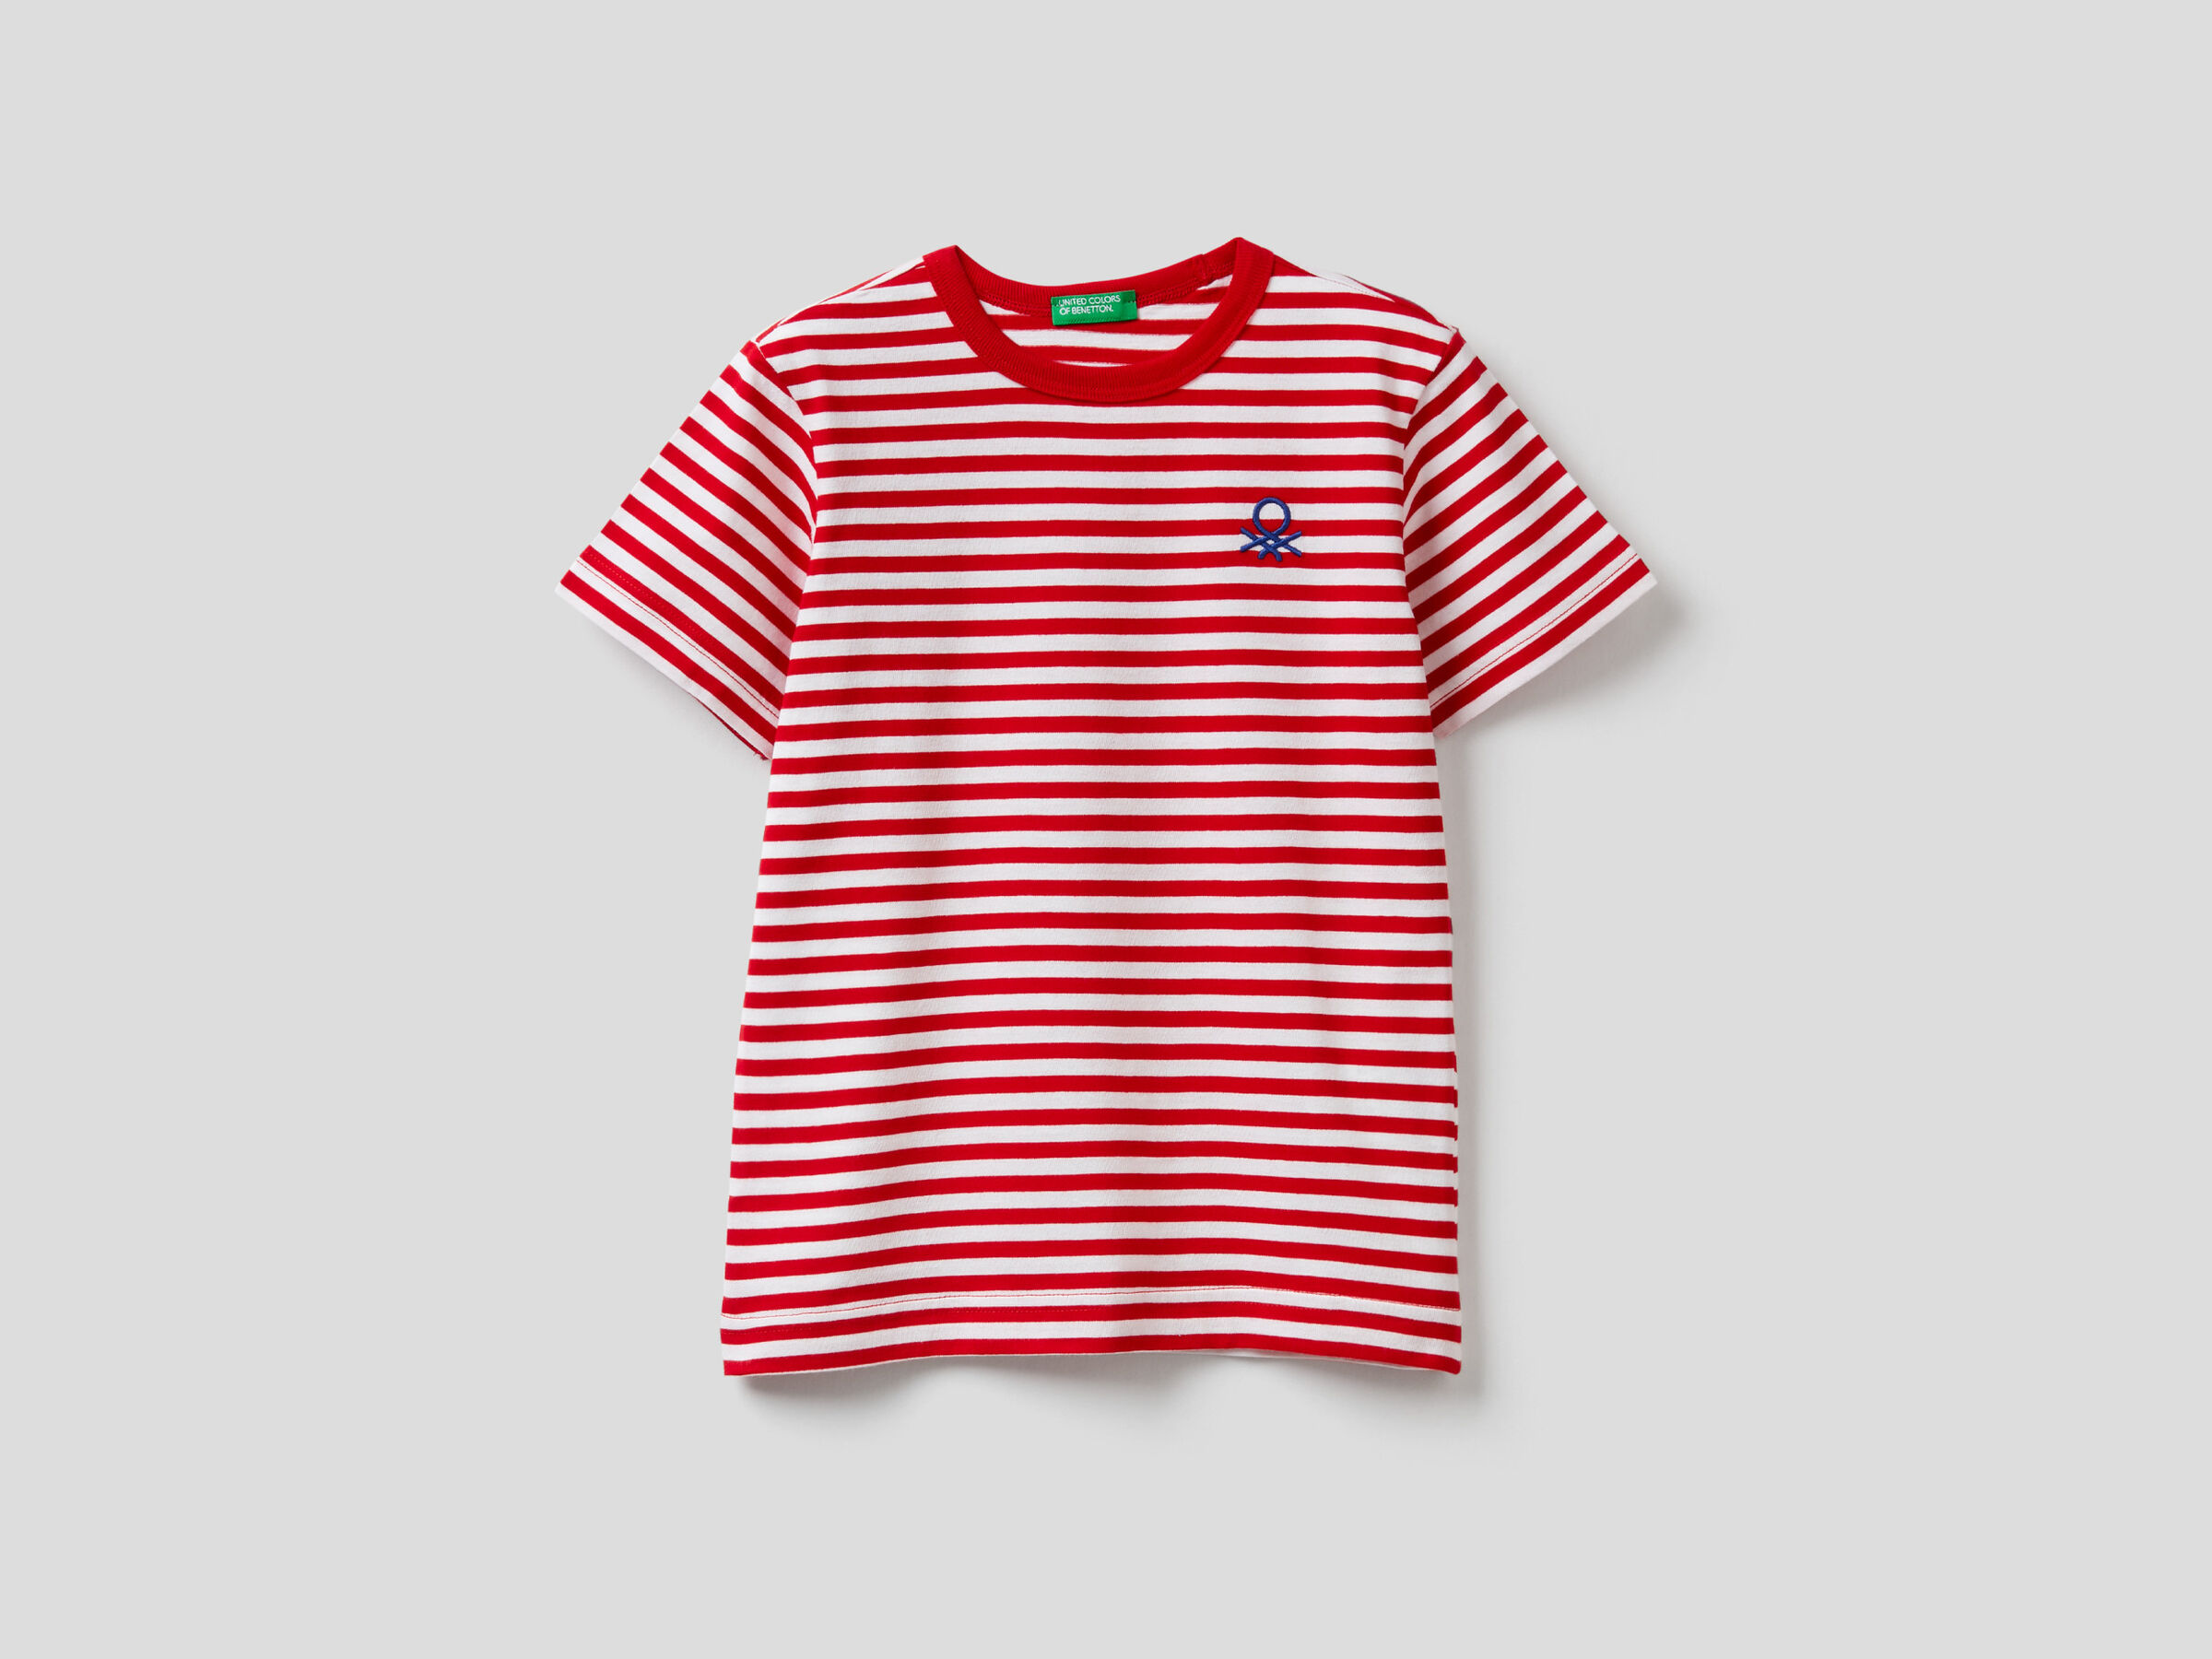 NEW 100% Cotton T-shirts Boys Girls Comfy Tops Shirts Rainbow Striped O-Neck UK